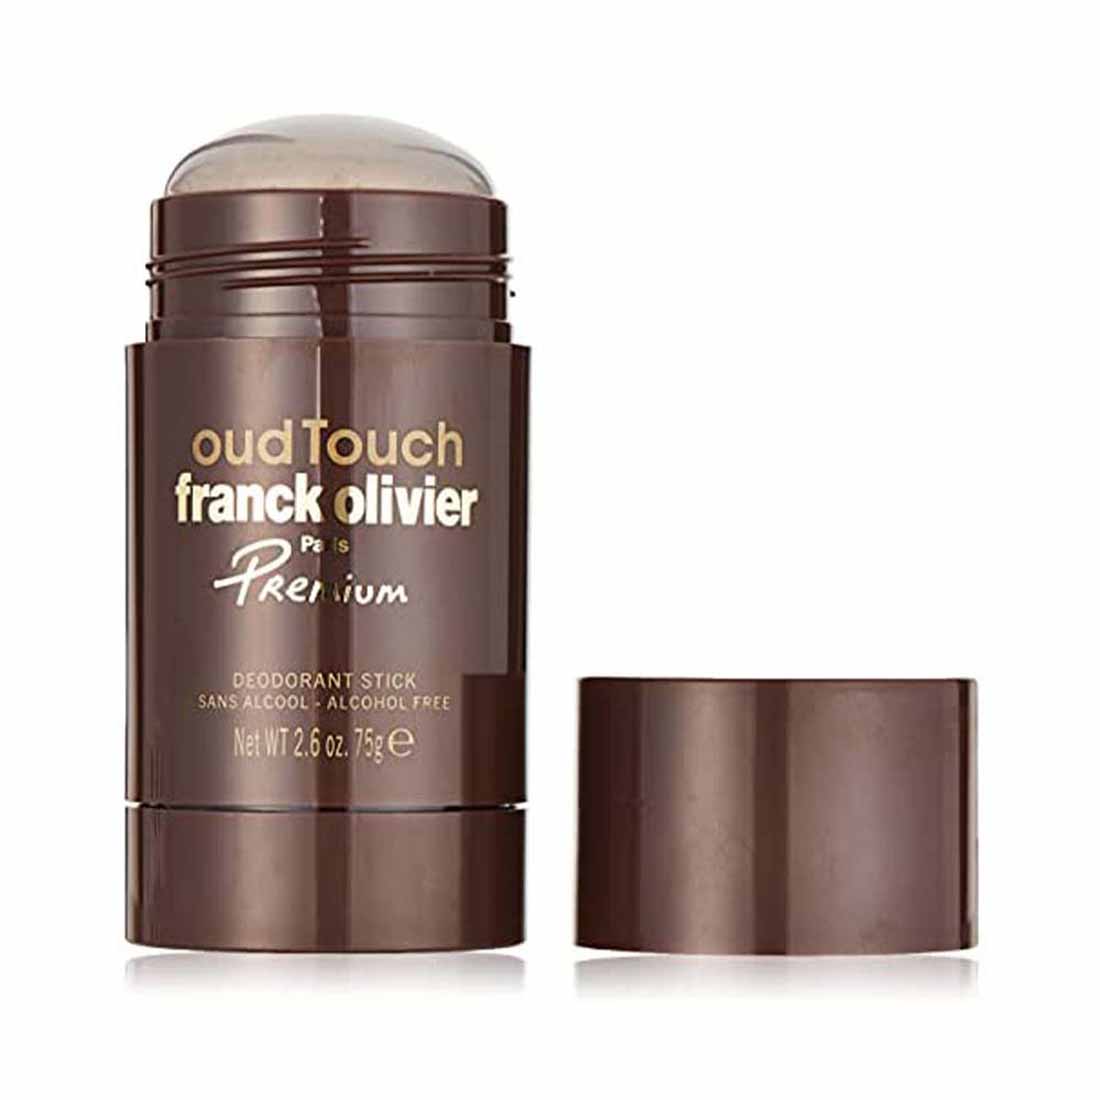 Franck Olivier Oud Touch Deodorant Stick For Men 75g